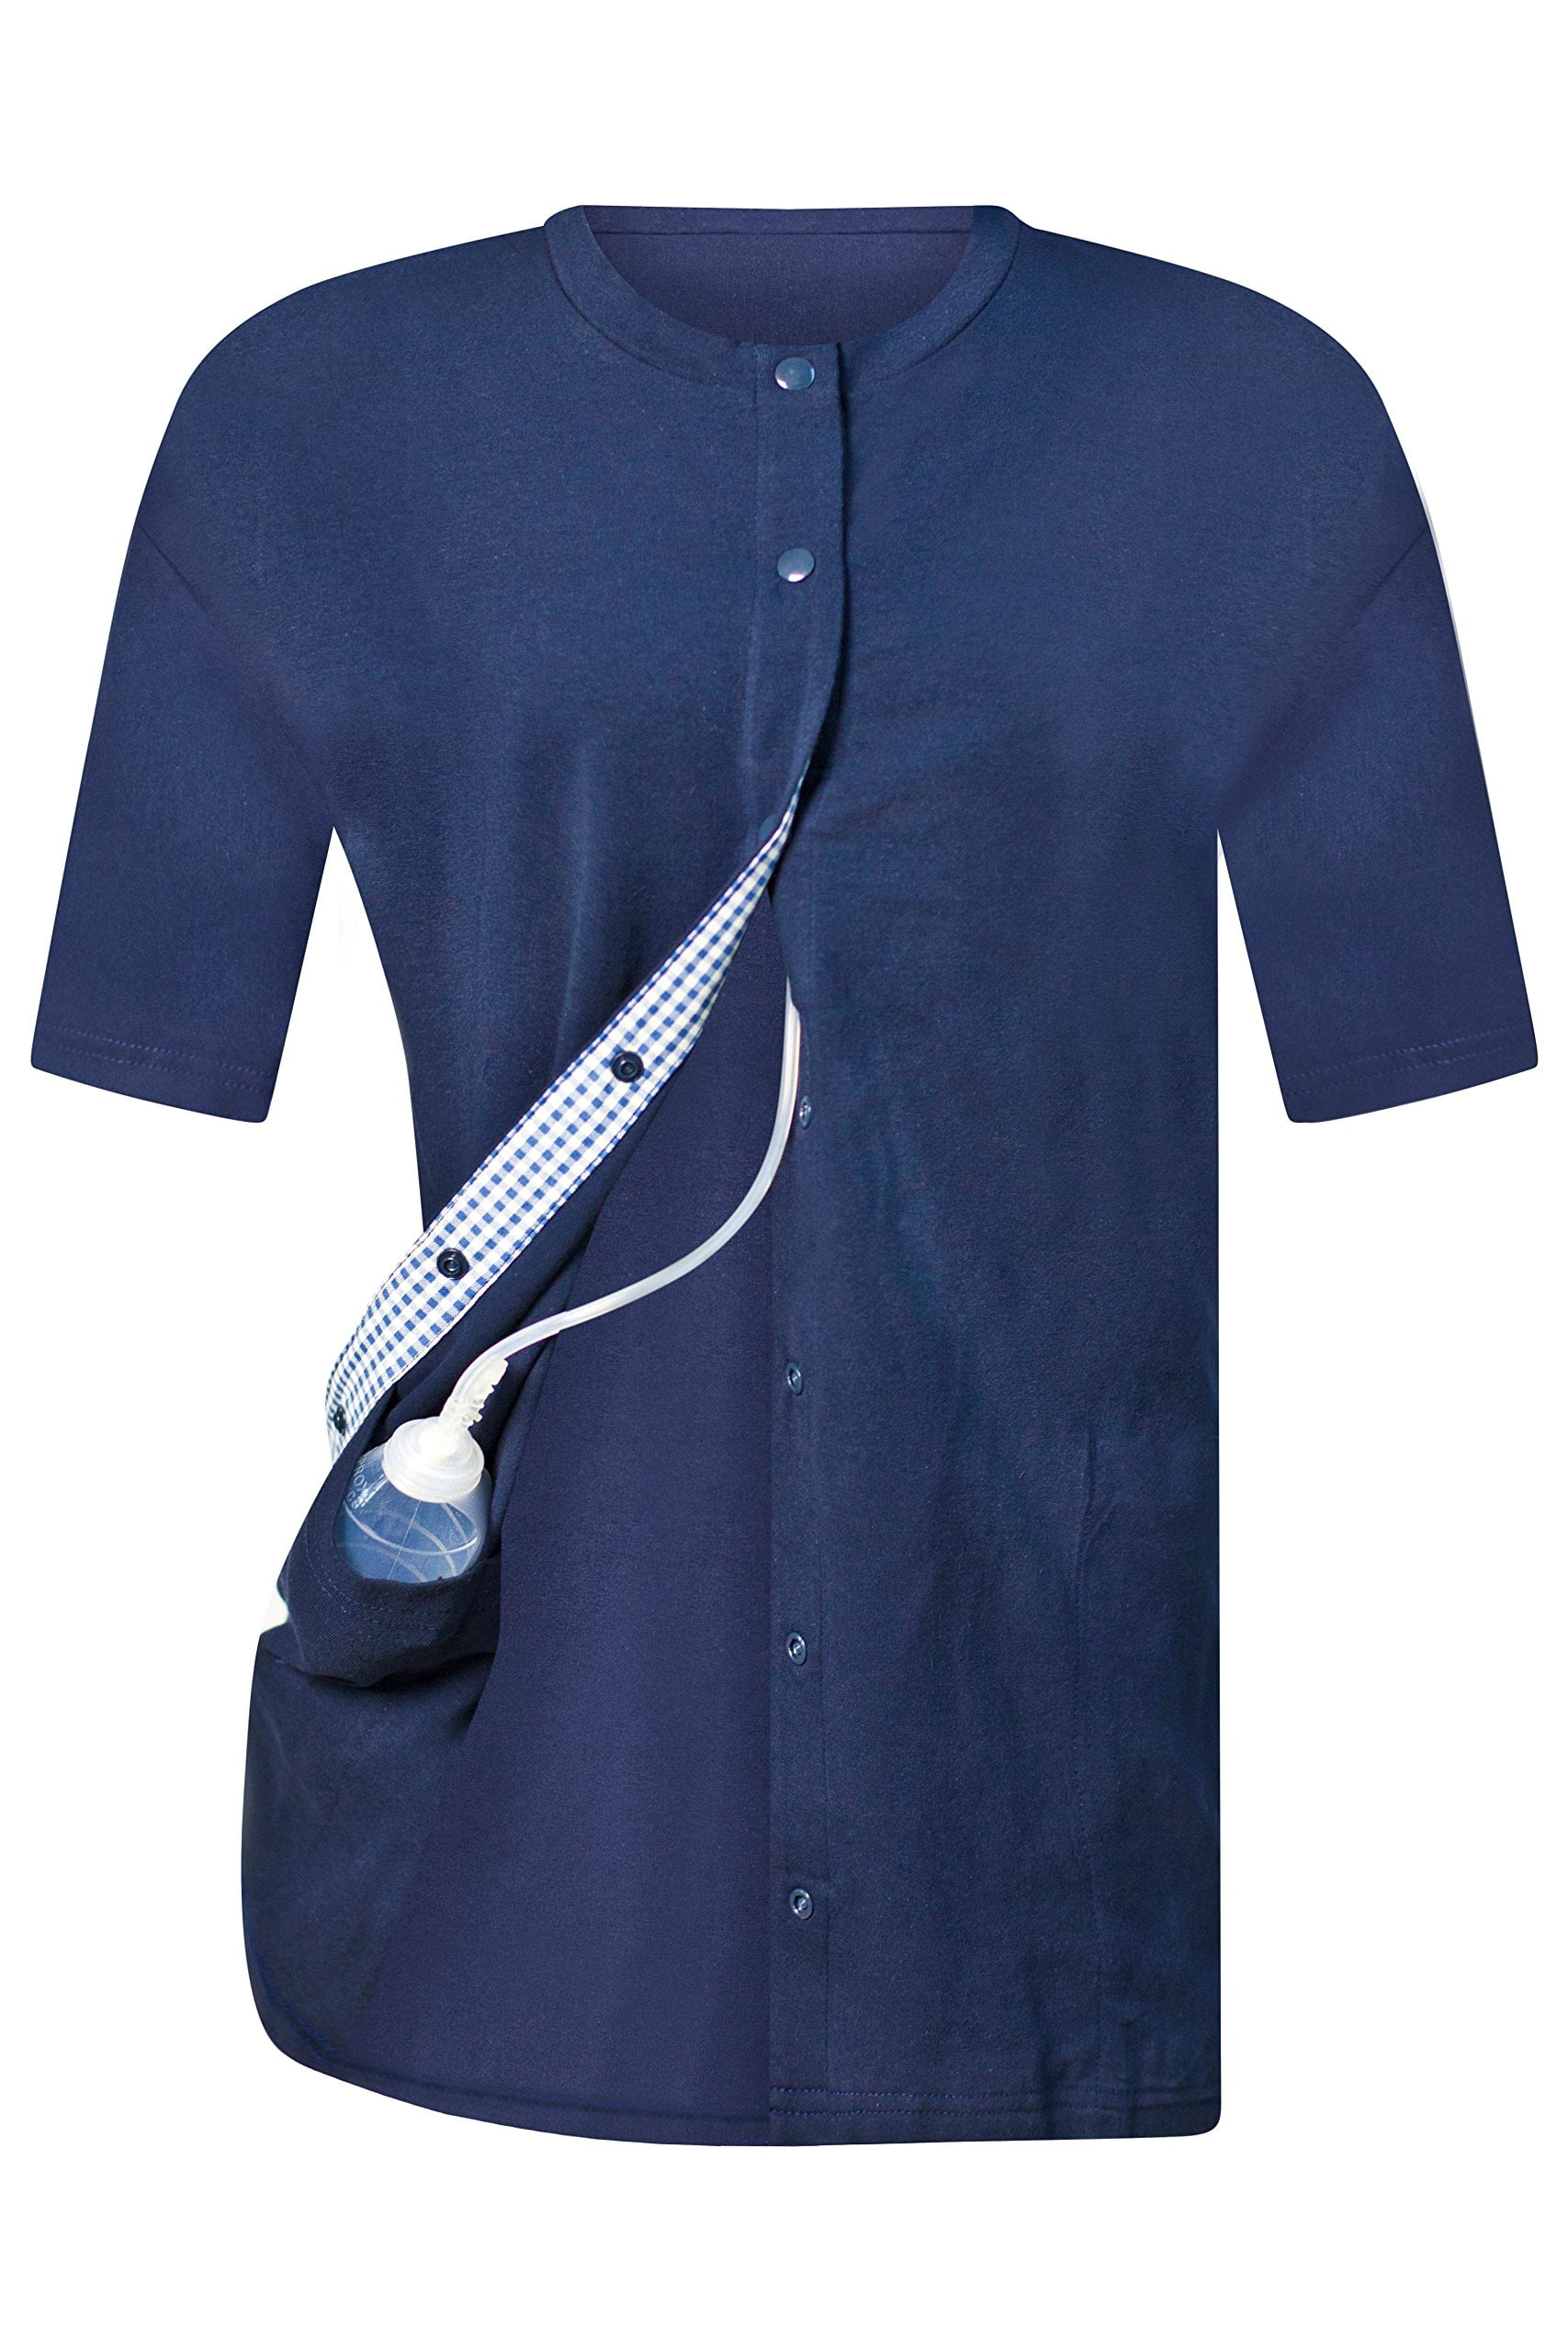 Shapewear & Fajas USA Faja Medica Post Operatoria Cirujia Liposuccion Skin  Care Breast Enhance Tshirt